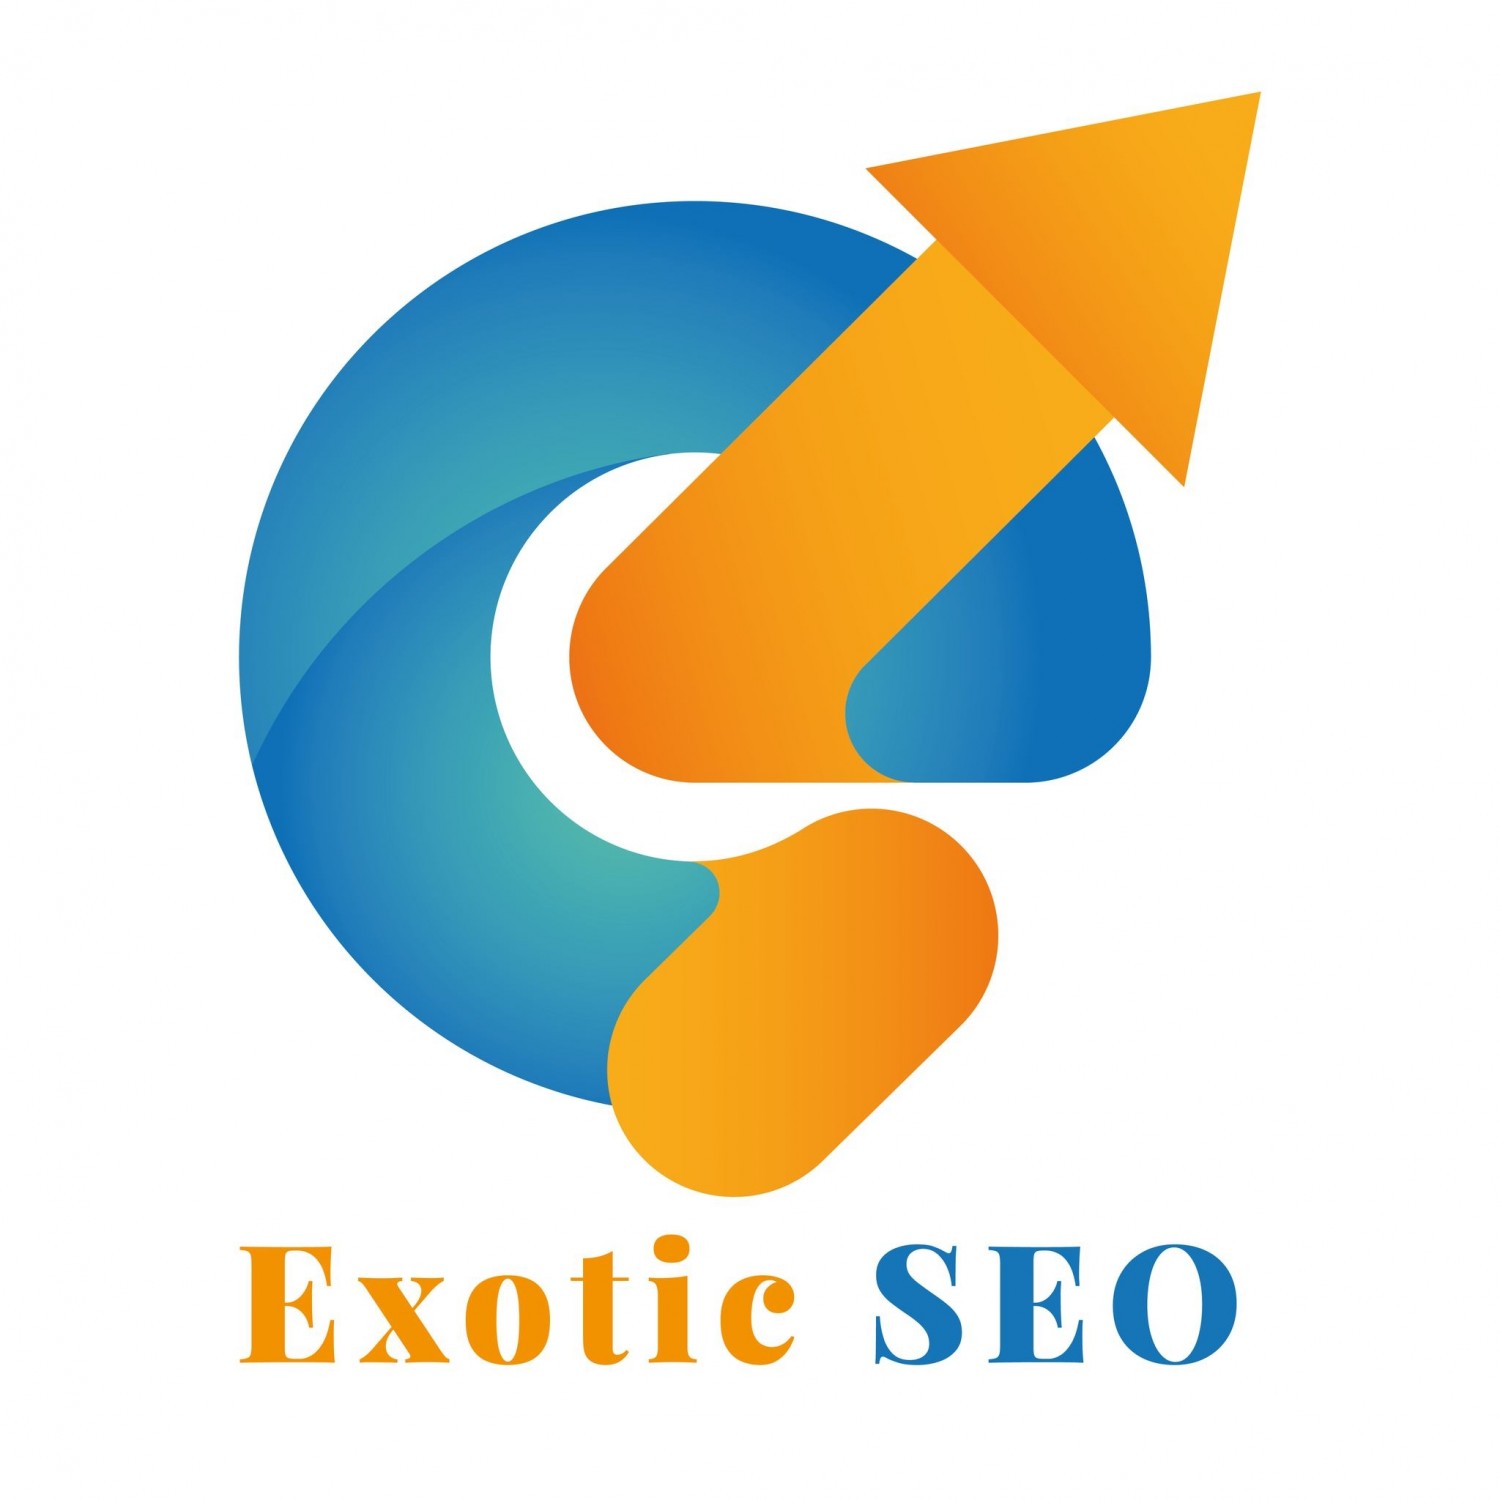 Exotic SEO - Digital Marketing Agency